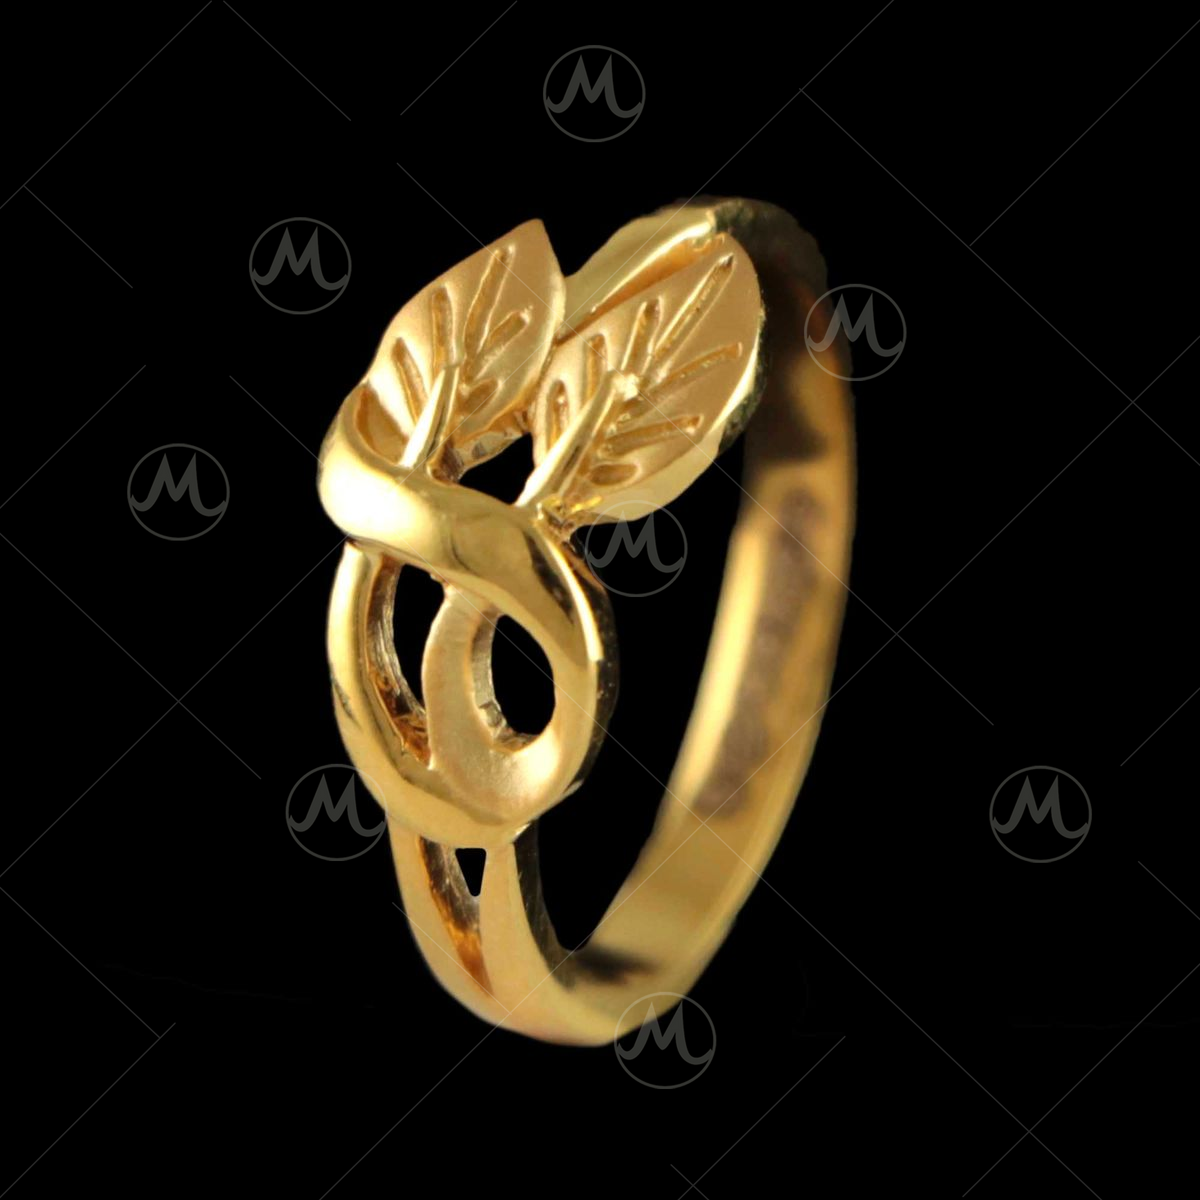 Buy 22Kt Plain Gold Italian Design Ladies Ring 93VD3856 Online from Vaibhav  Jewellers